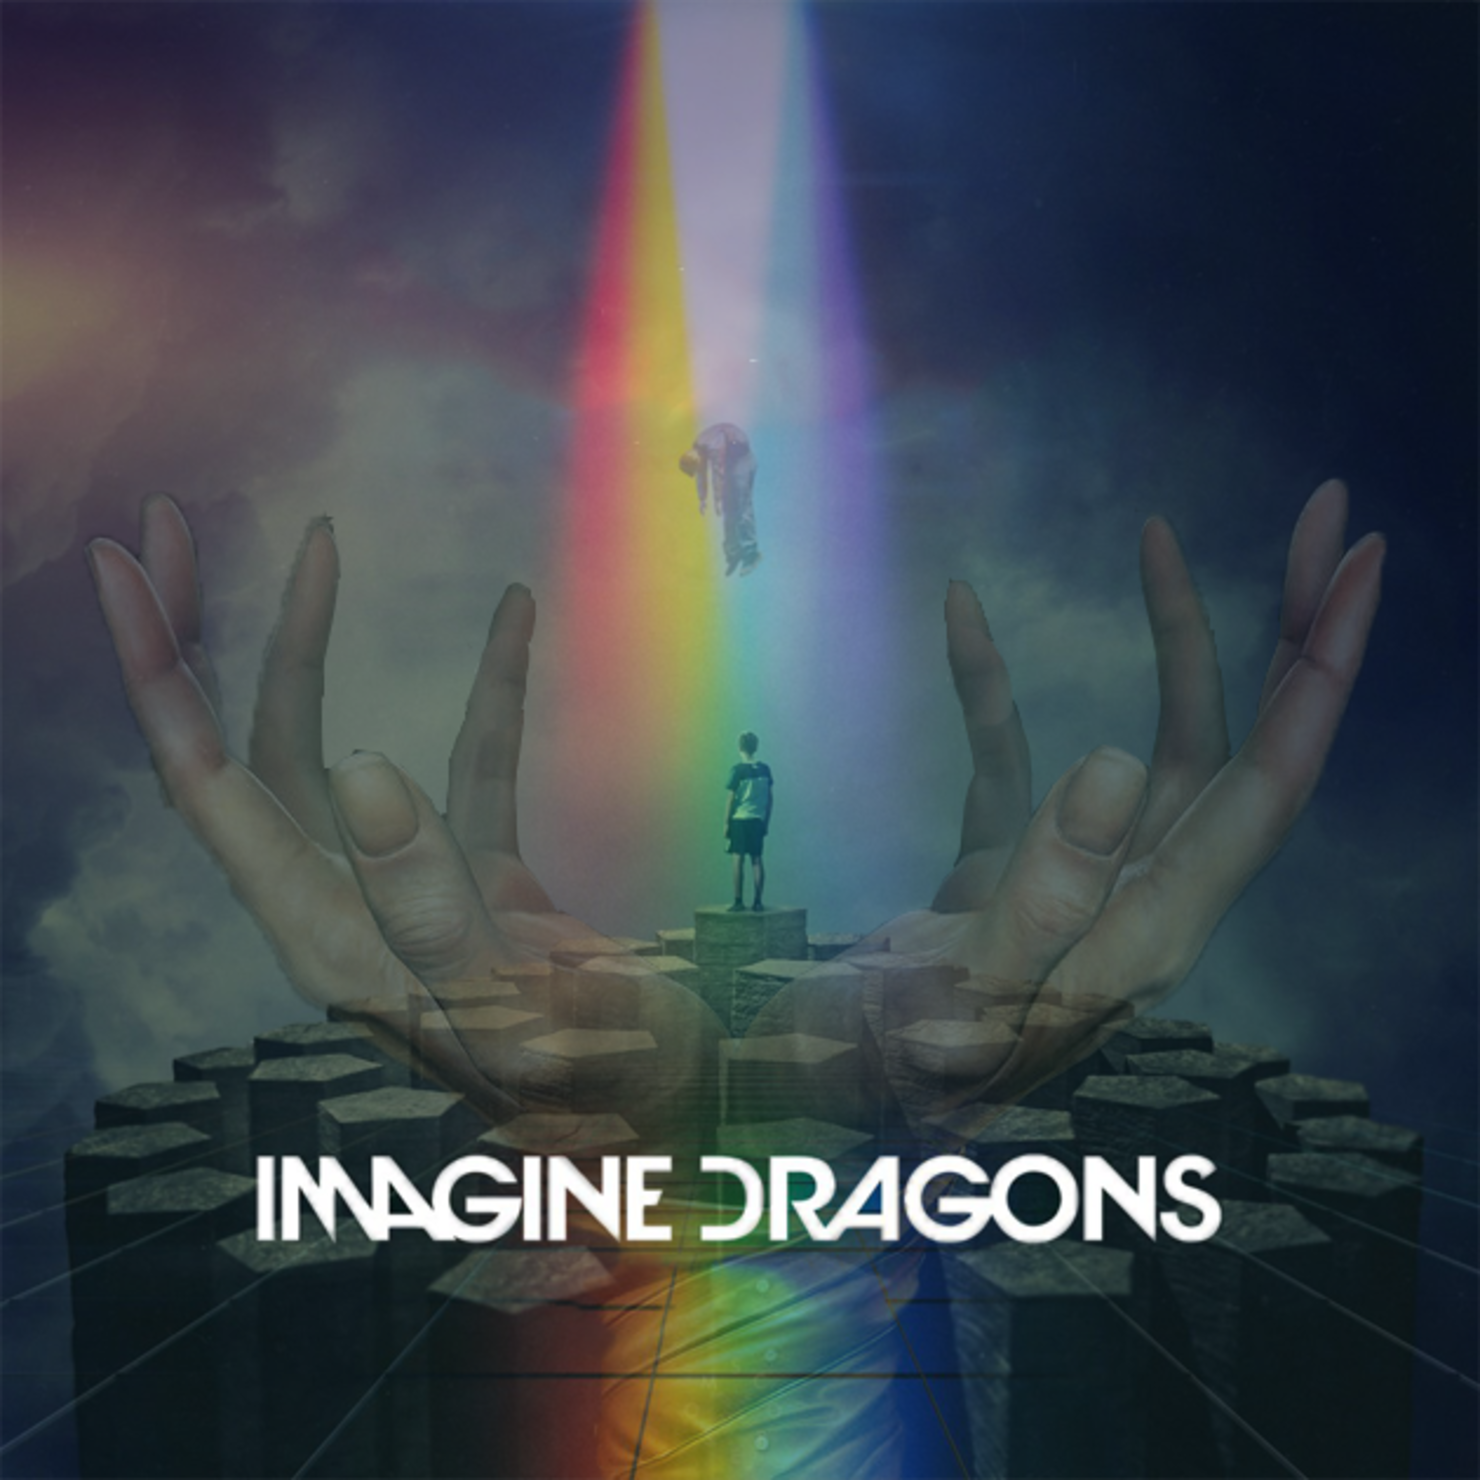 Evolve imagine. Imagine Dragons альбомы. Imagine Dragons обложки. Enemy imagine Dragons обложка. Imagine Dragons Origins обложка.